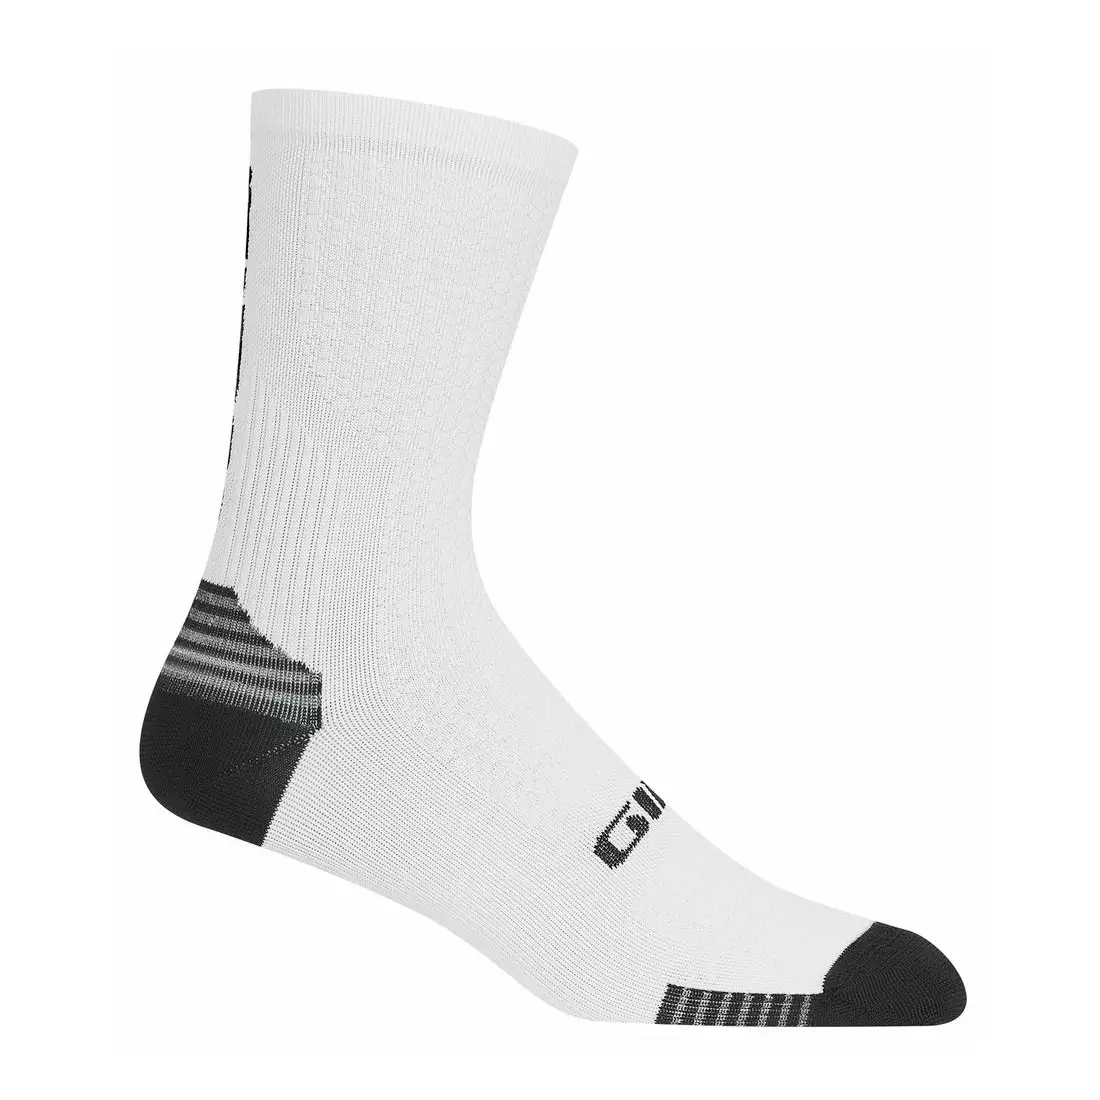 GIRO cycling socks hrc + grip white black GR-7111984